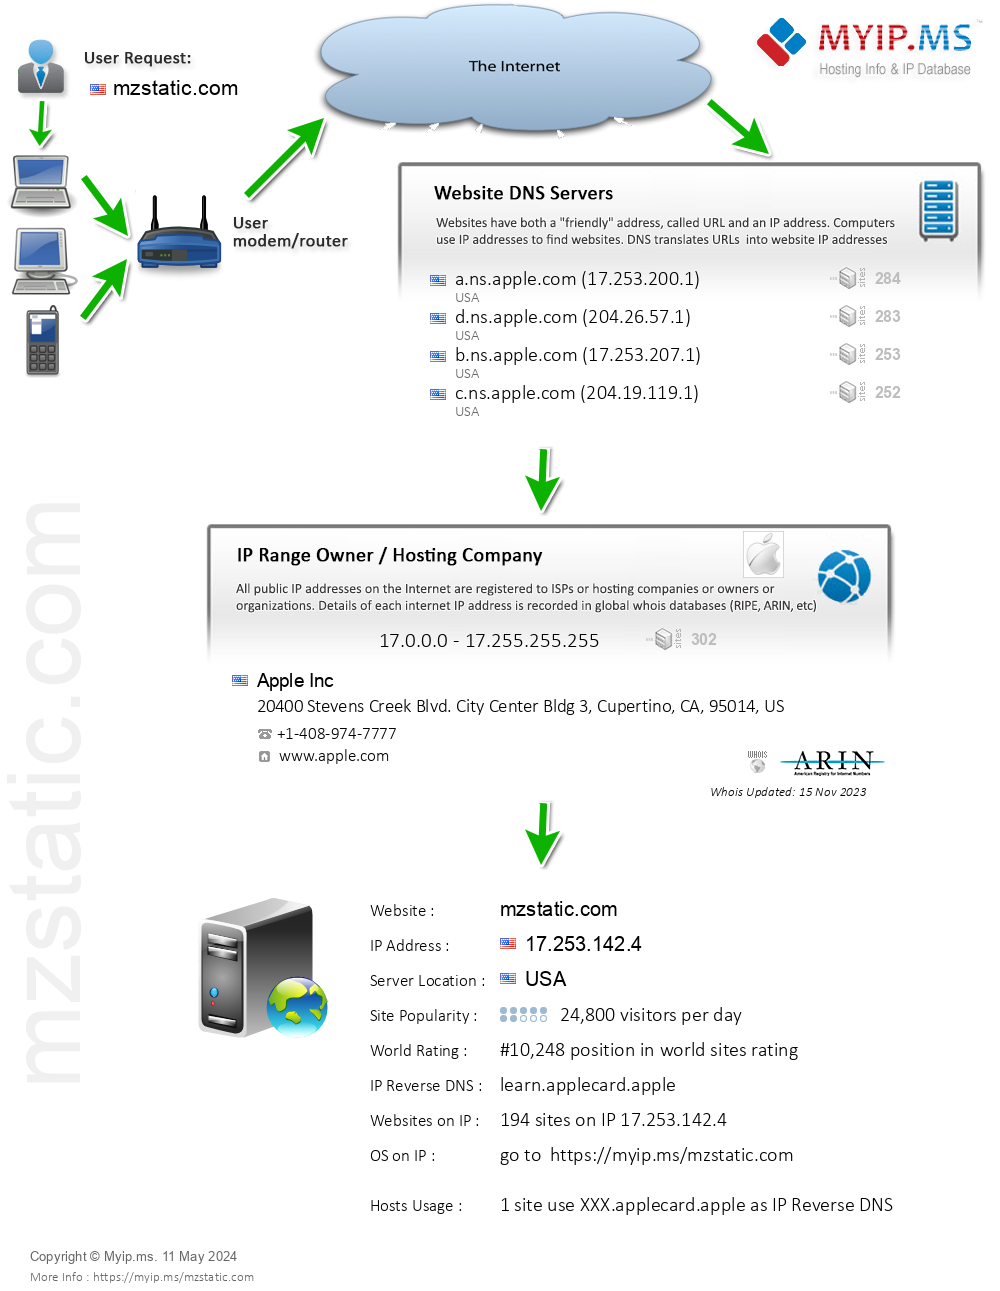 Mzstatic.com - Website Hosting Visual IP Diagram